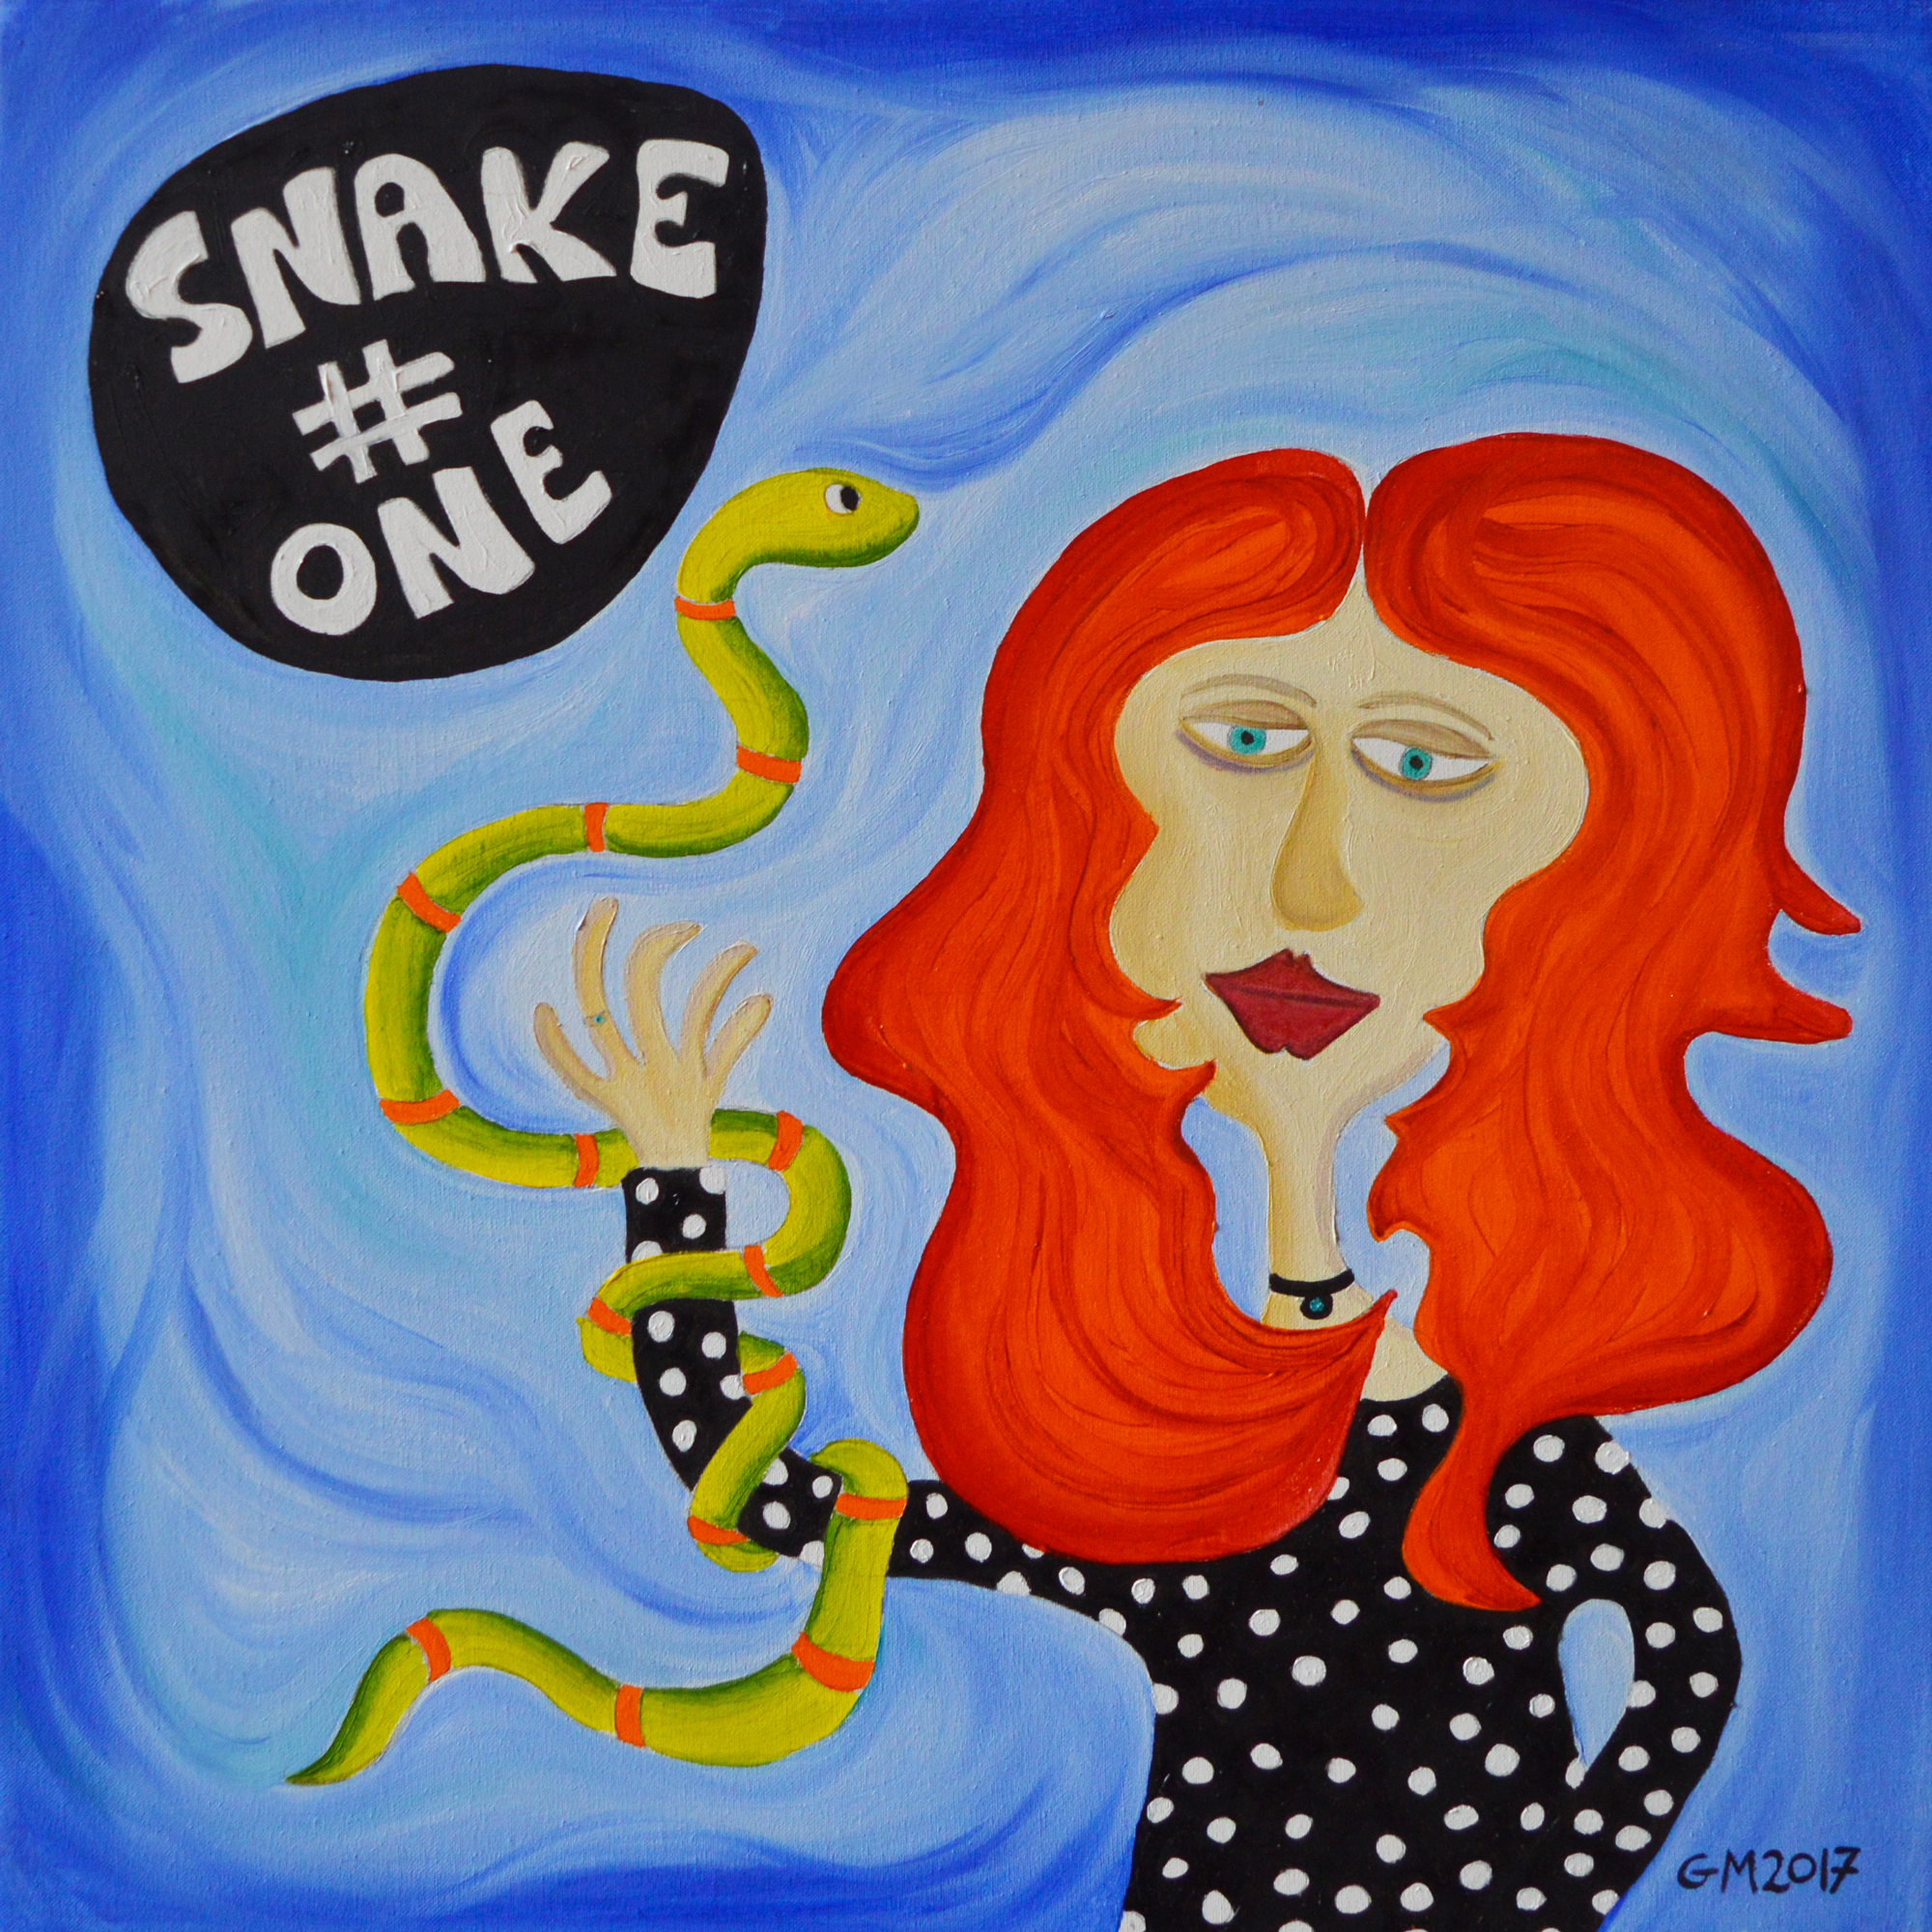 Snake # one